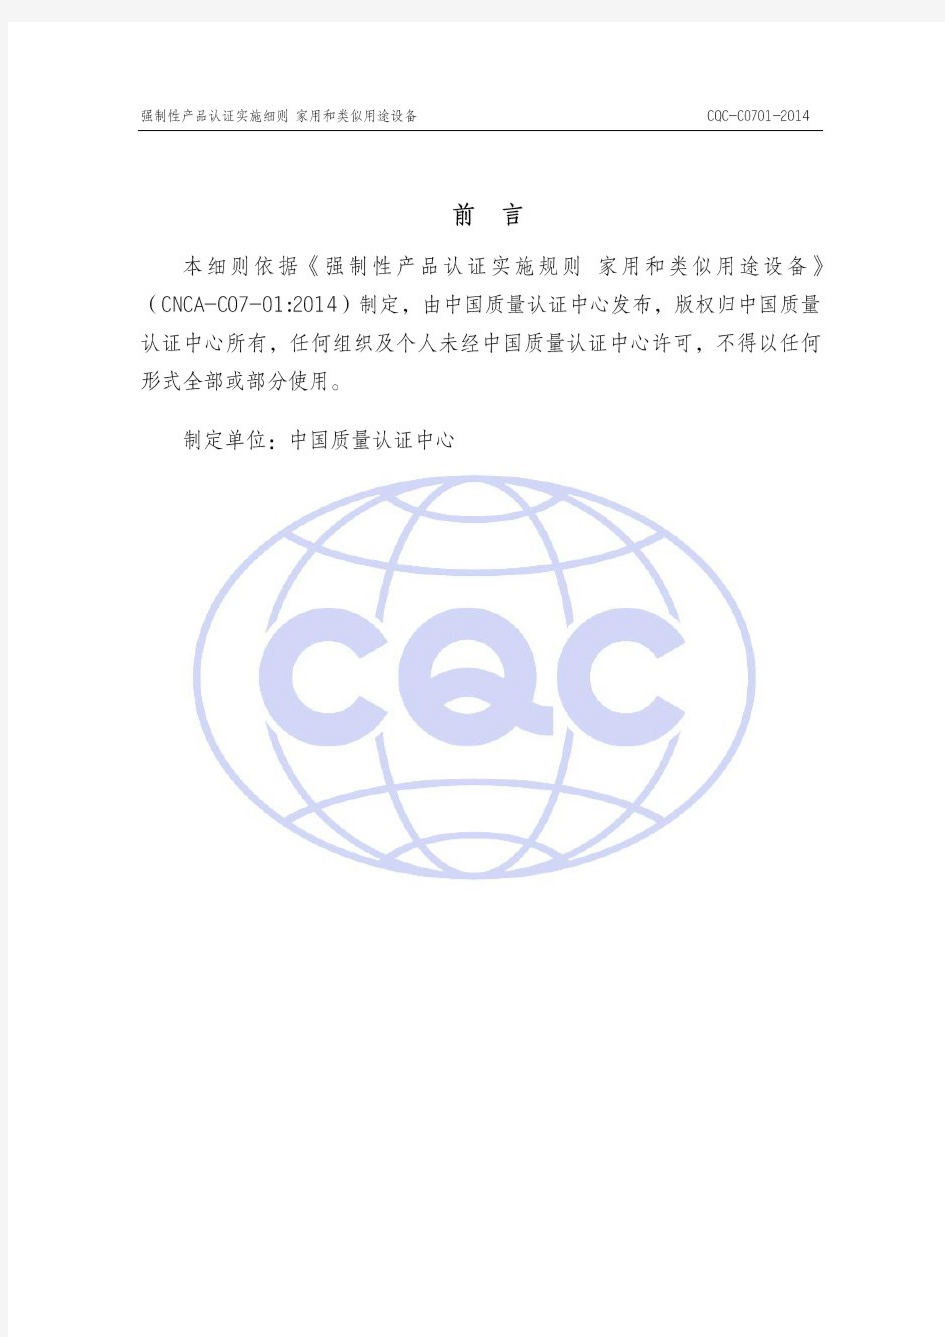 CQC-C0701-2014 家用和类似用途设备认证实施细则